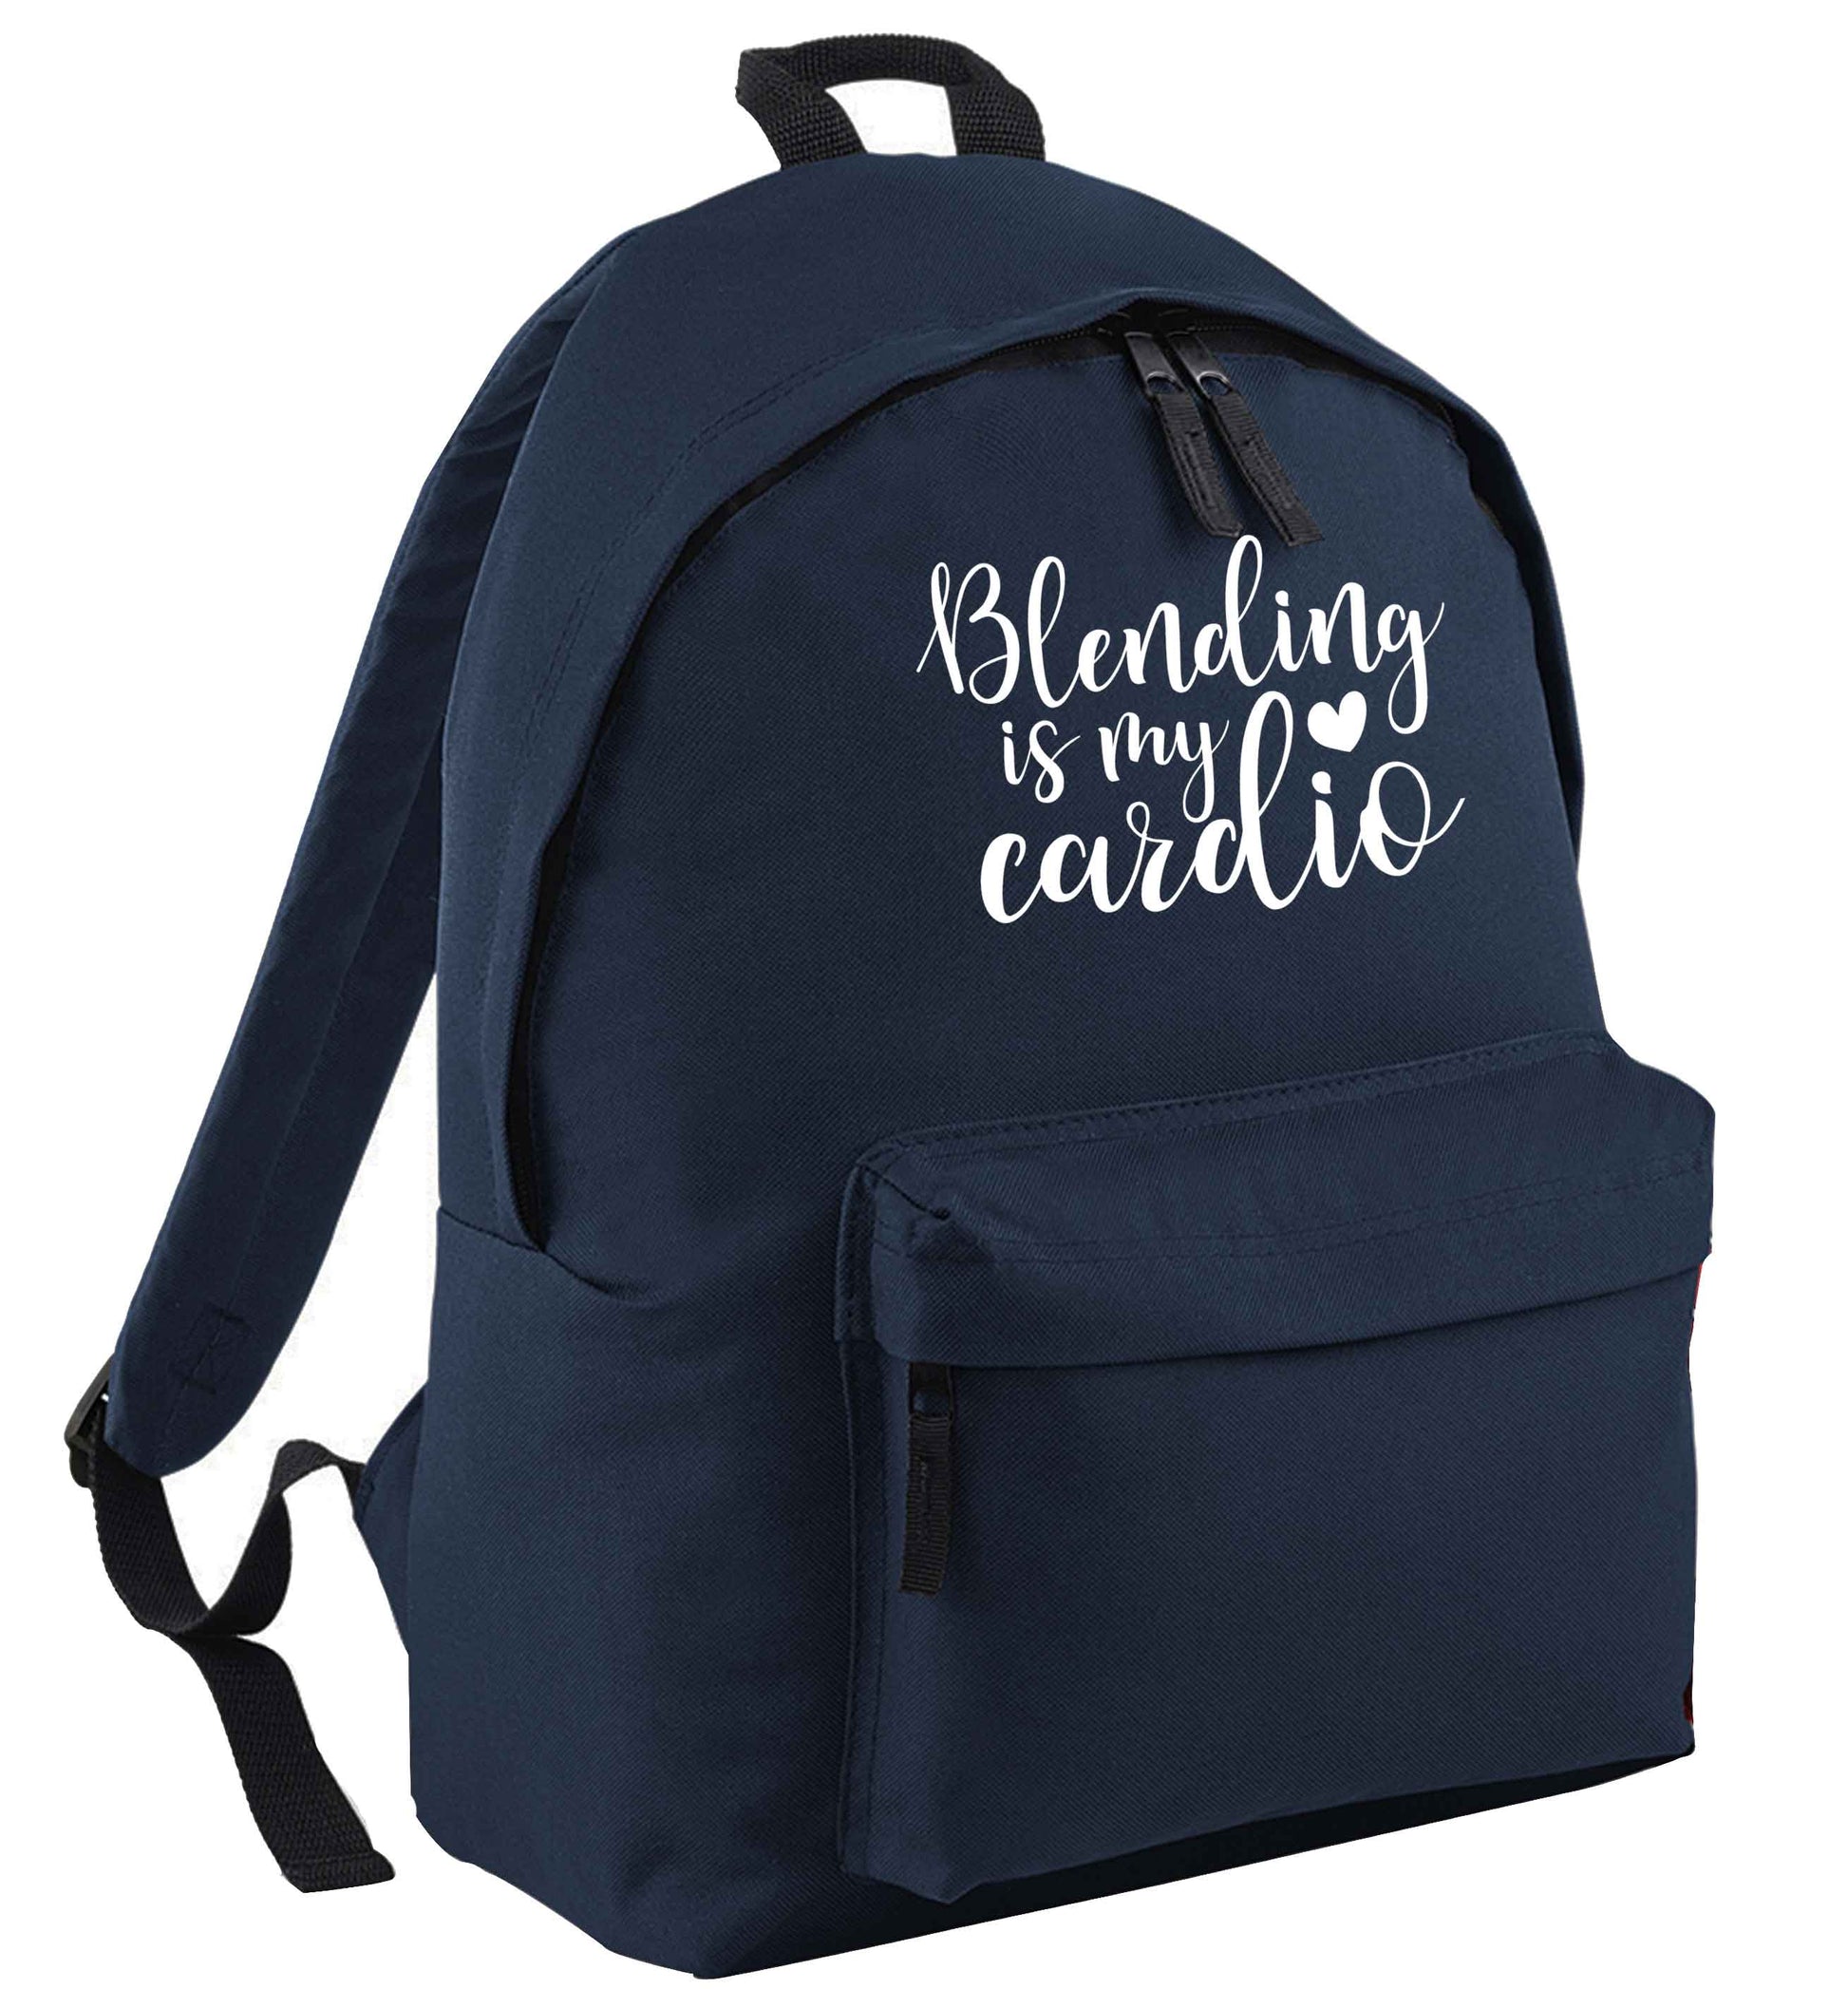 Blending is my cardio | Children's backpack